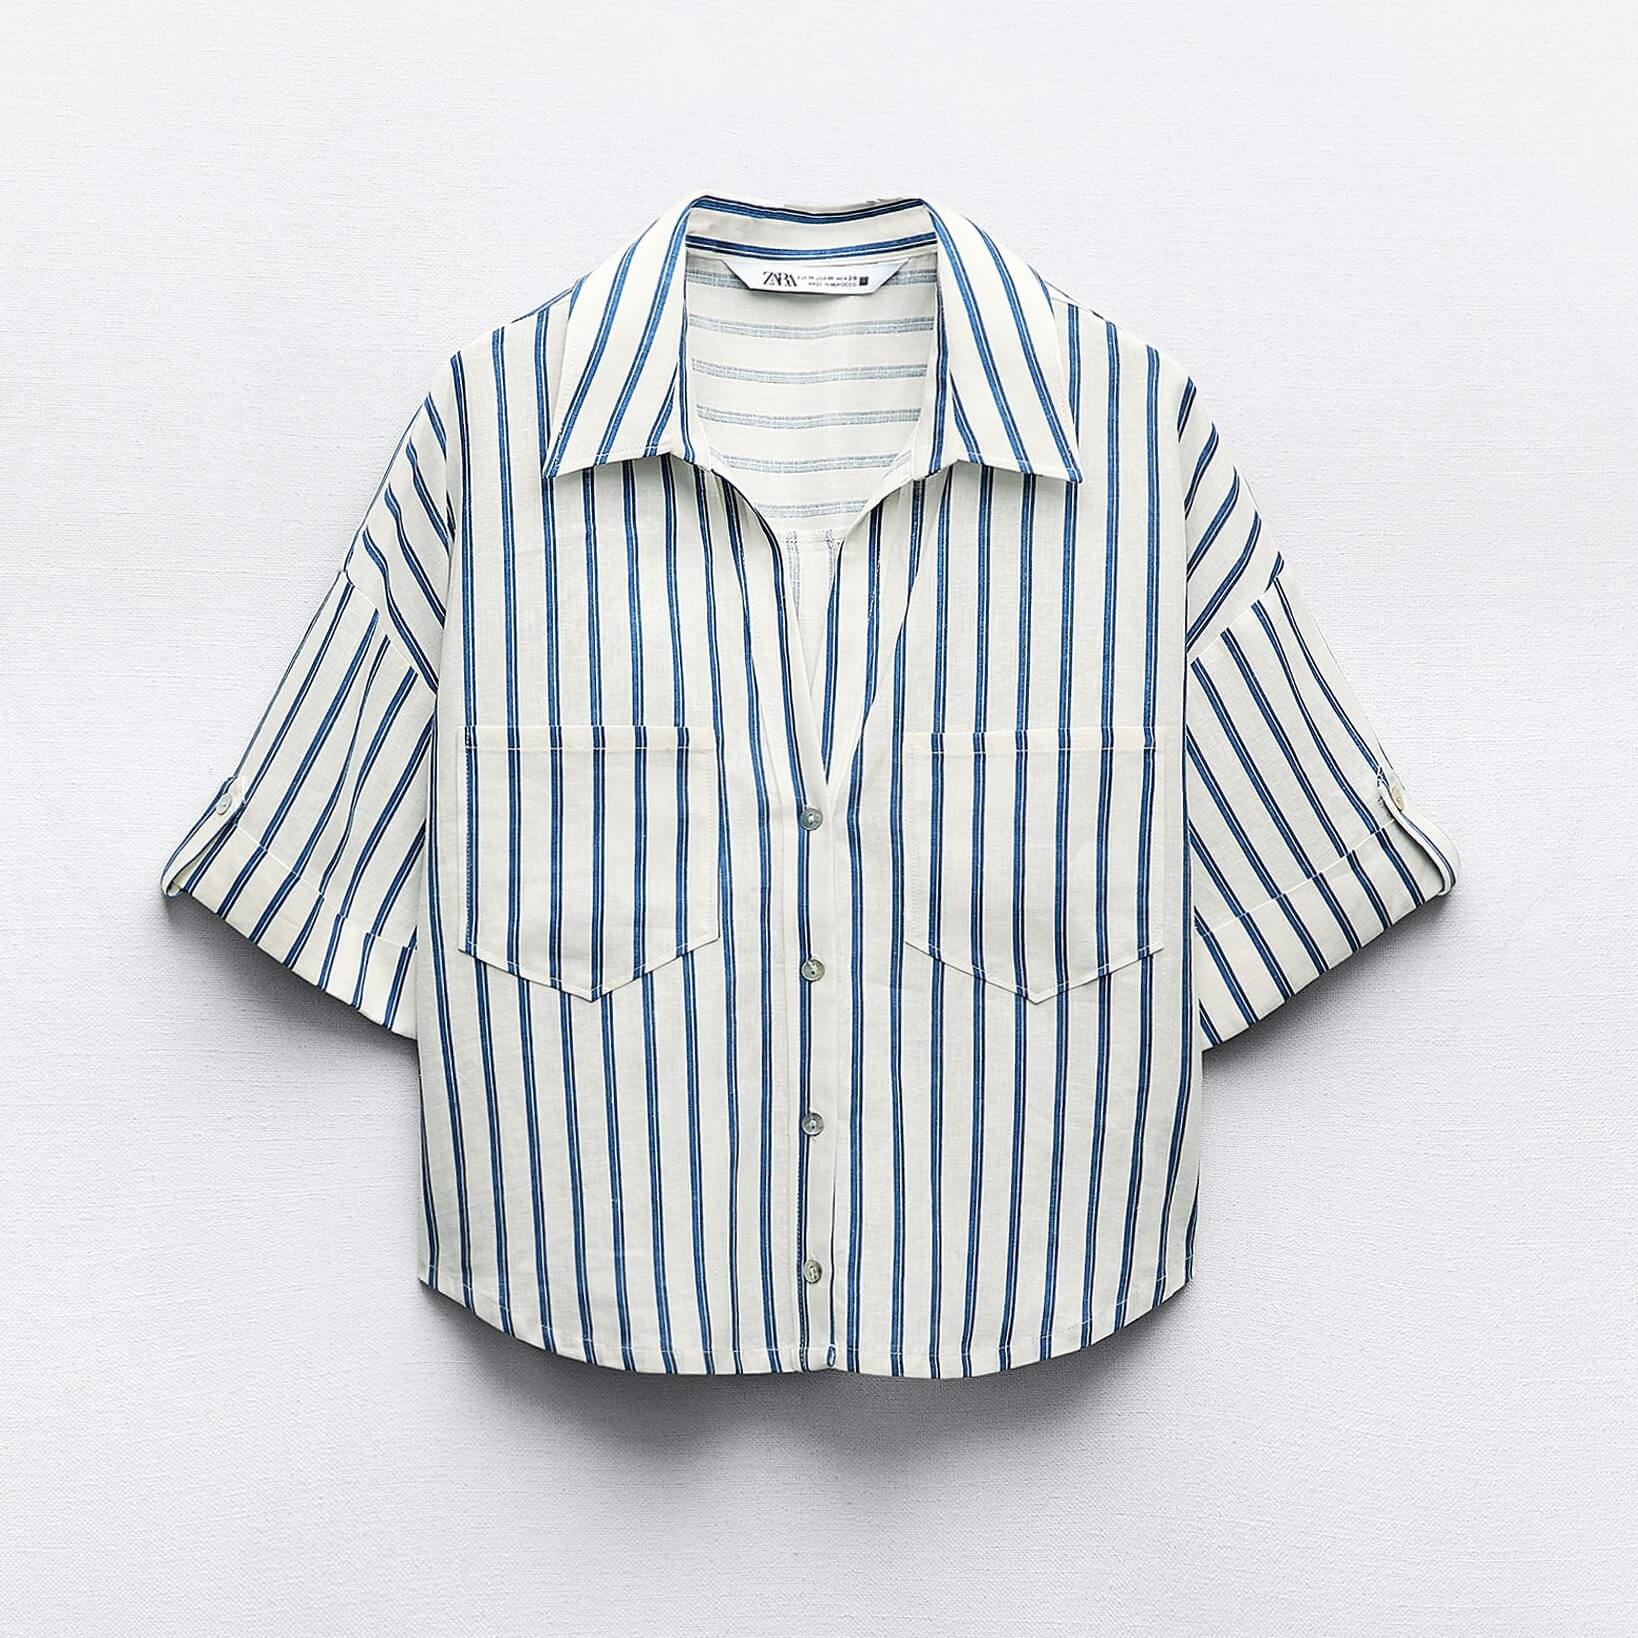 Рубашка Zara Linen Blend Short Sleeve, синий/белый рубашка zara kids striped linen blend синий белый